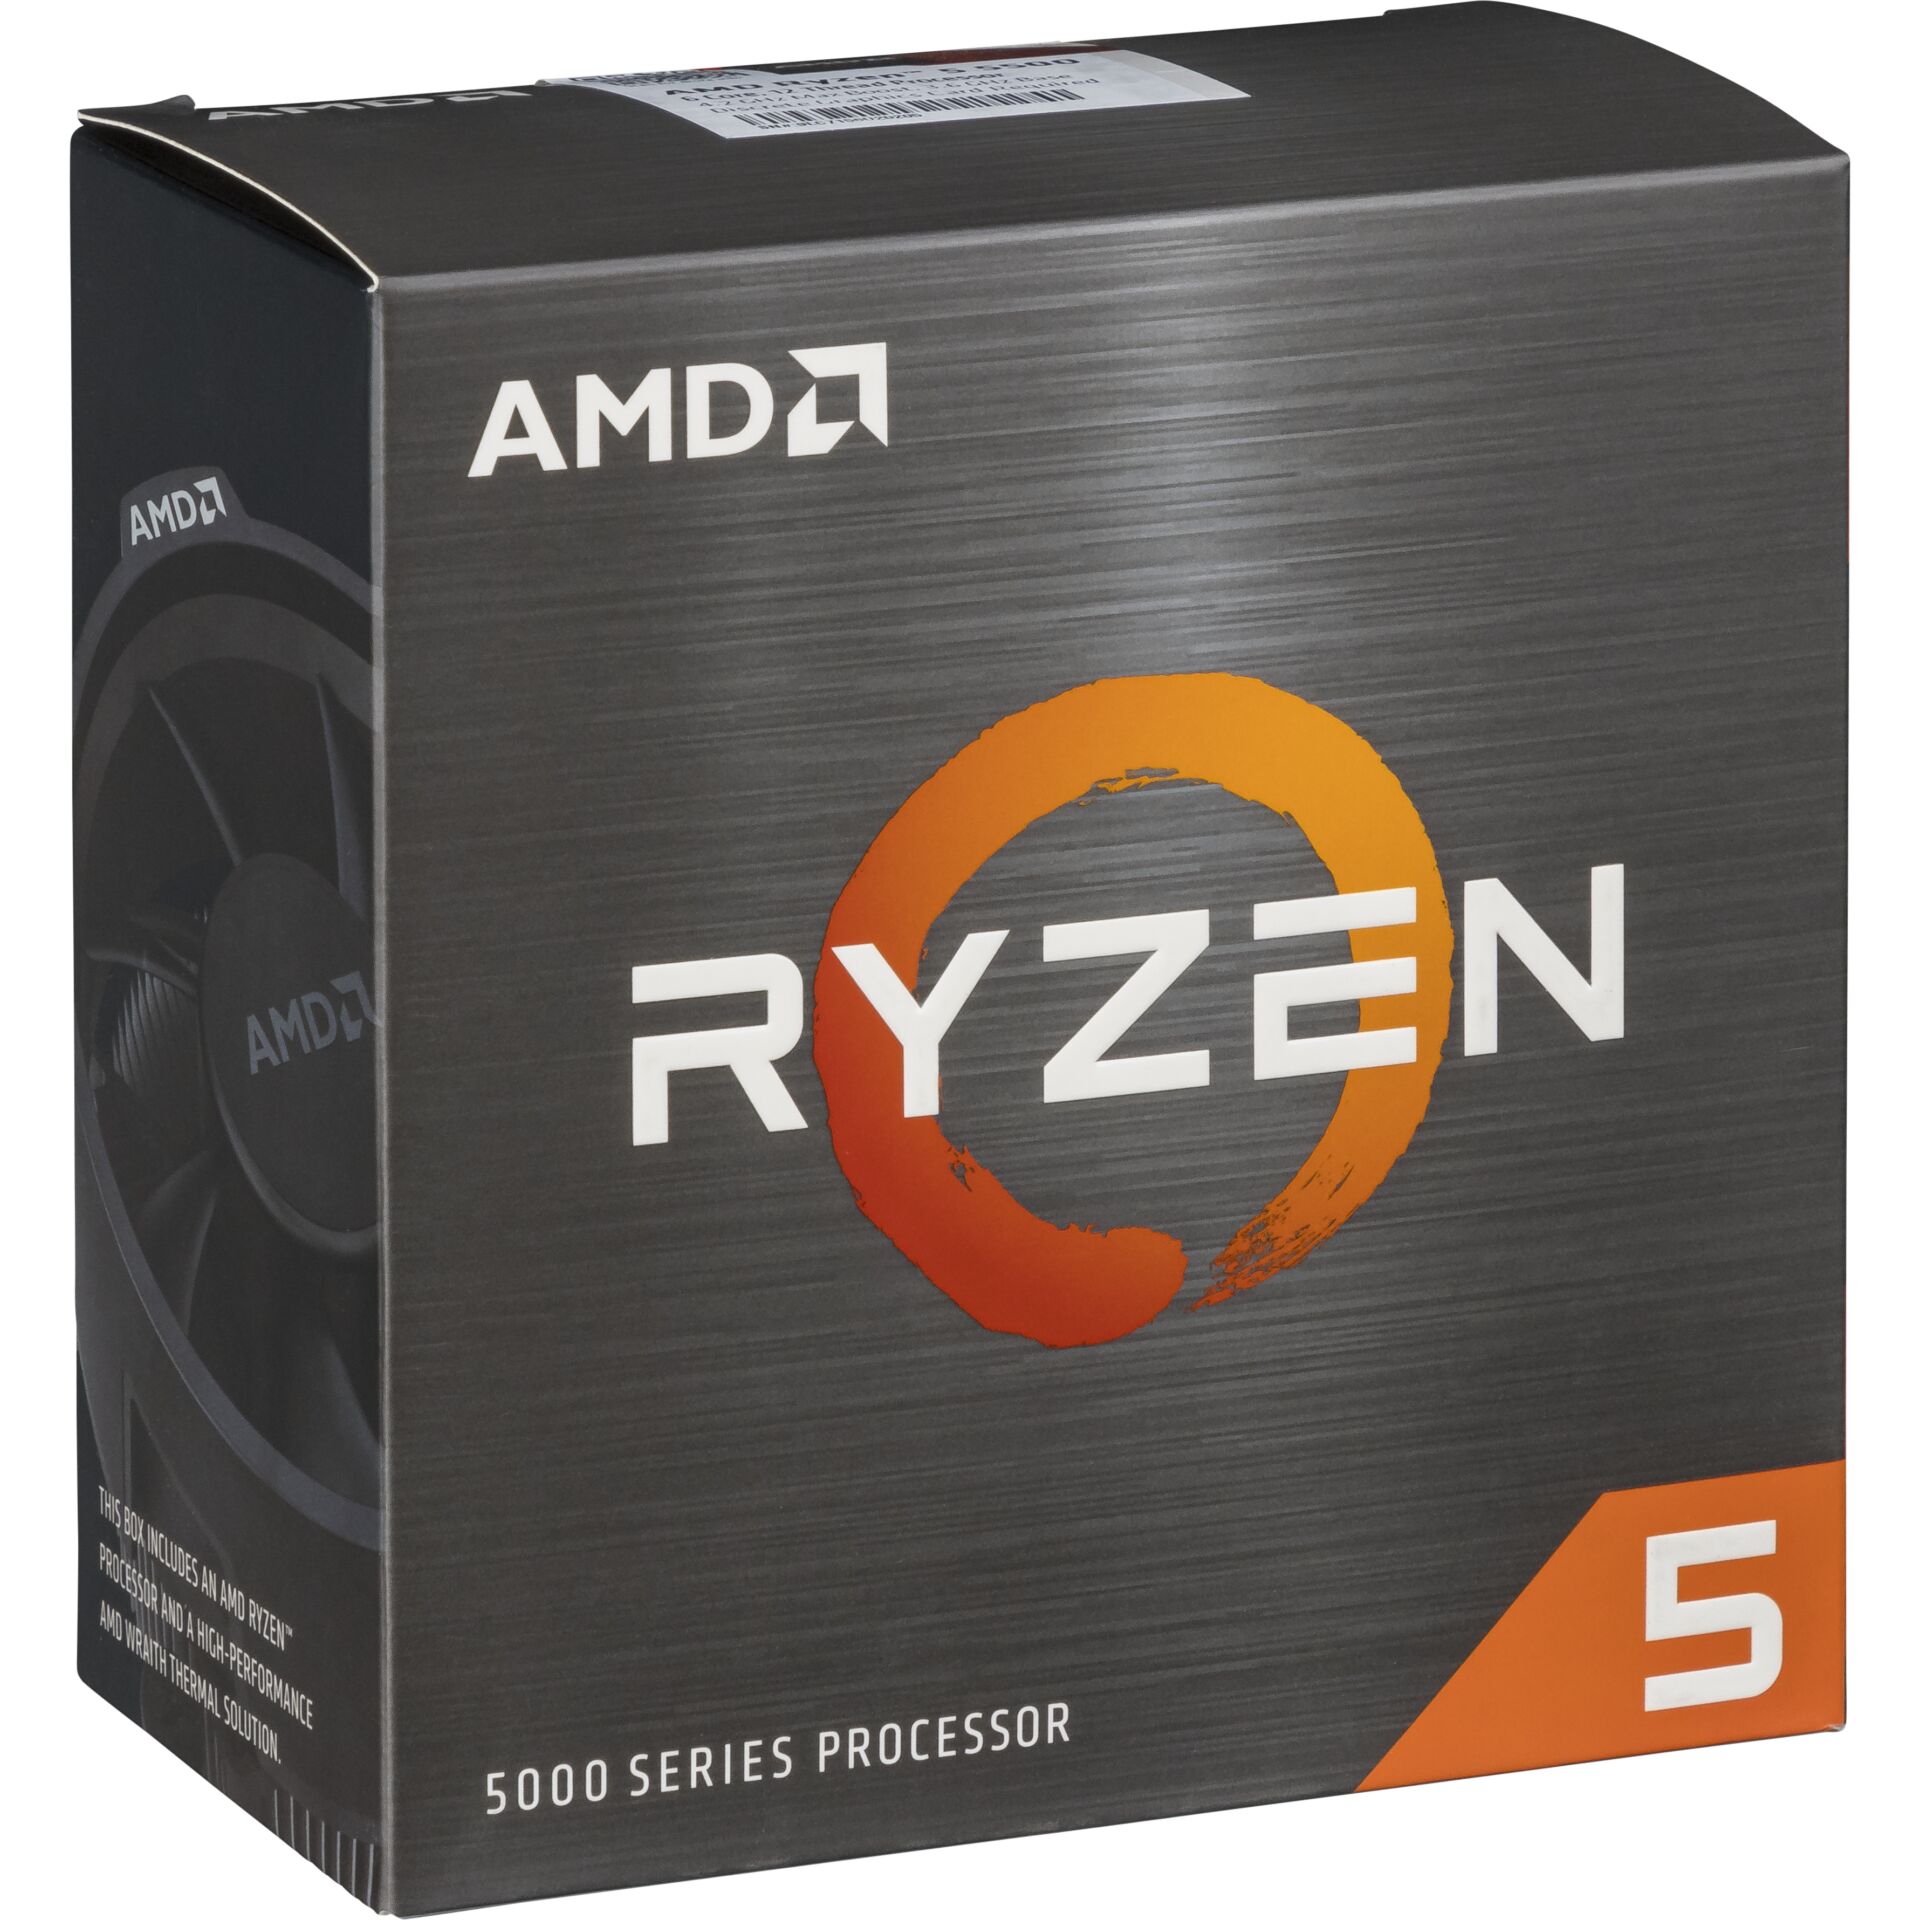 AMD Ryzen 5 5500, 6C/12T, 3.60-4.20GHz, boxed, Sockel AM4 (PGA), Vermeer CPU